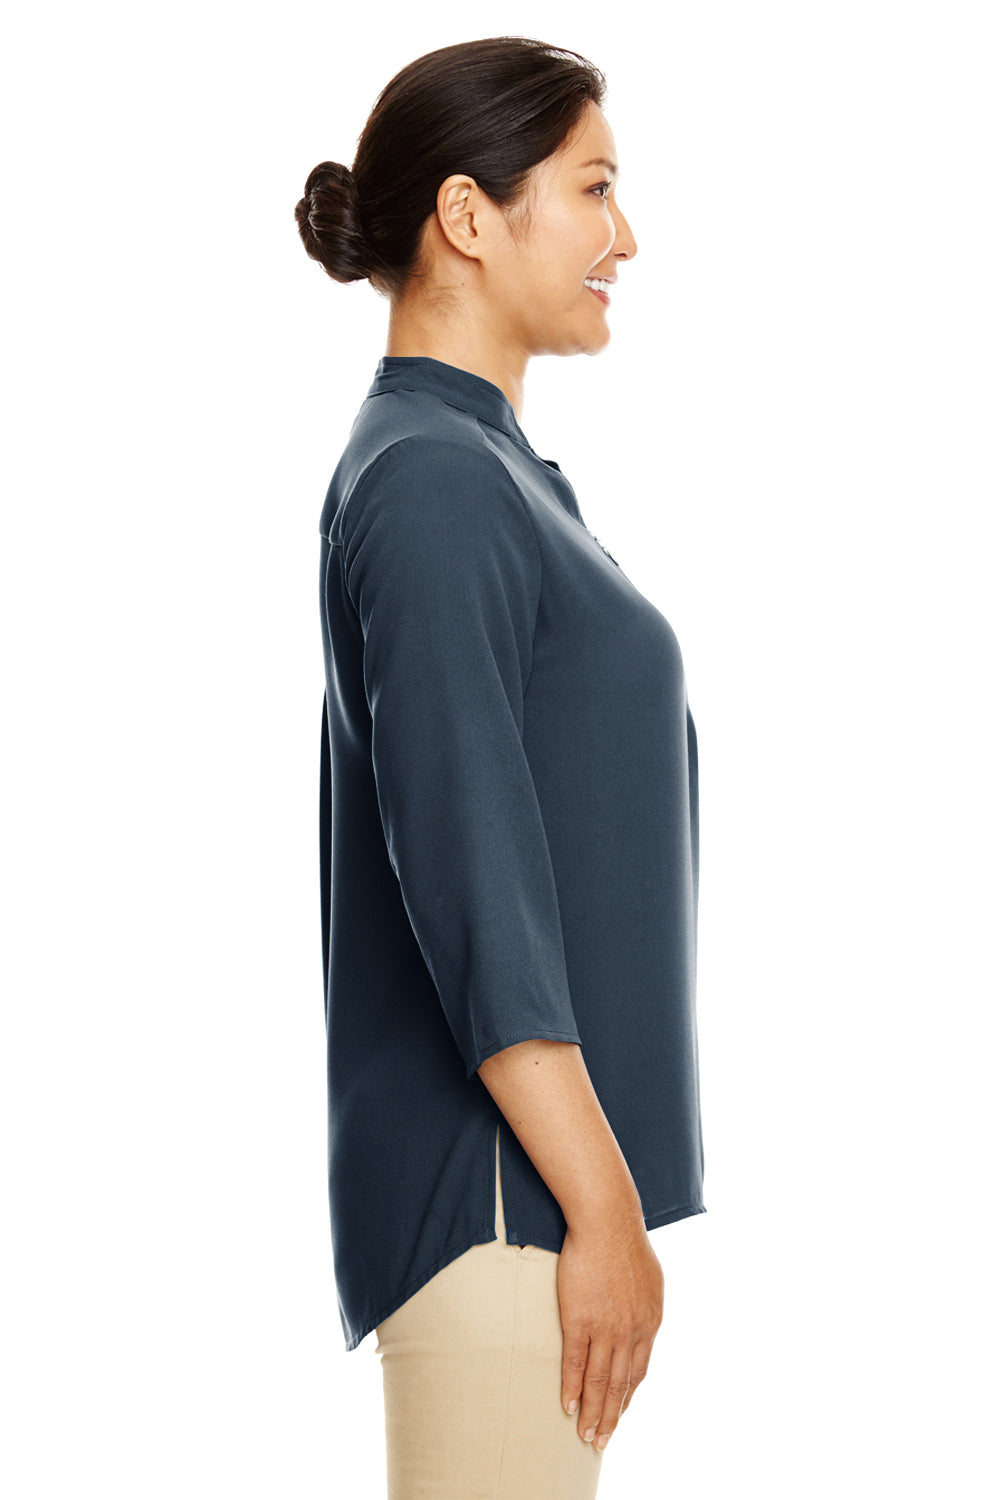 Devon & Jones DP611W Womens Perfect Fit Short Sleeve 1/4 Zip Crepe Tunic Navy Blue Side